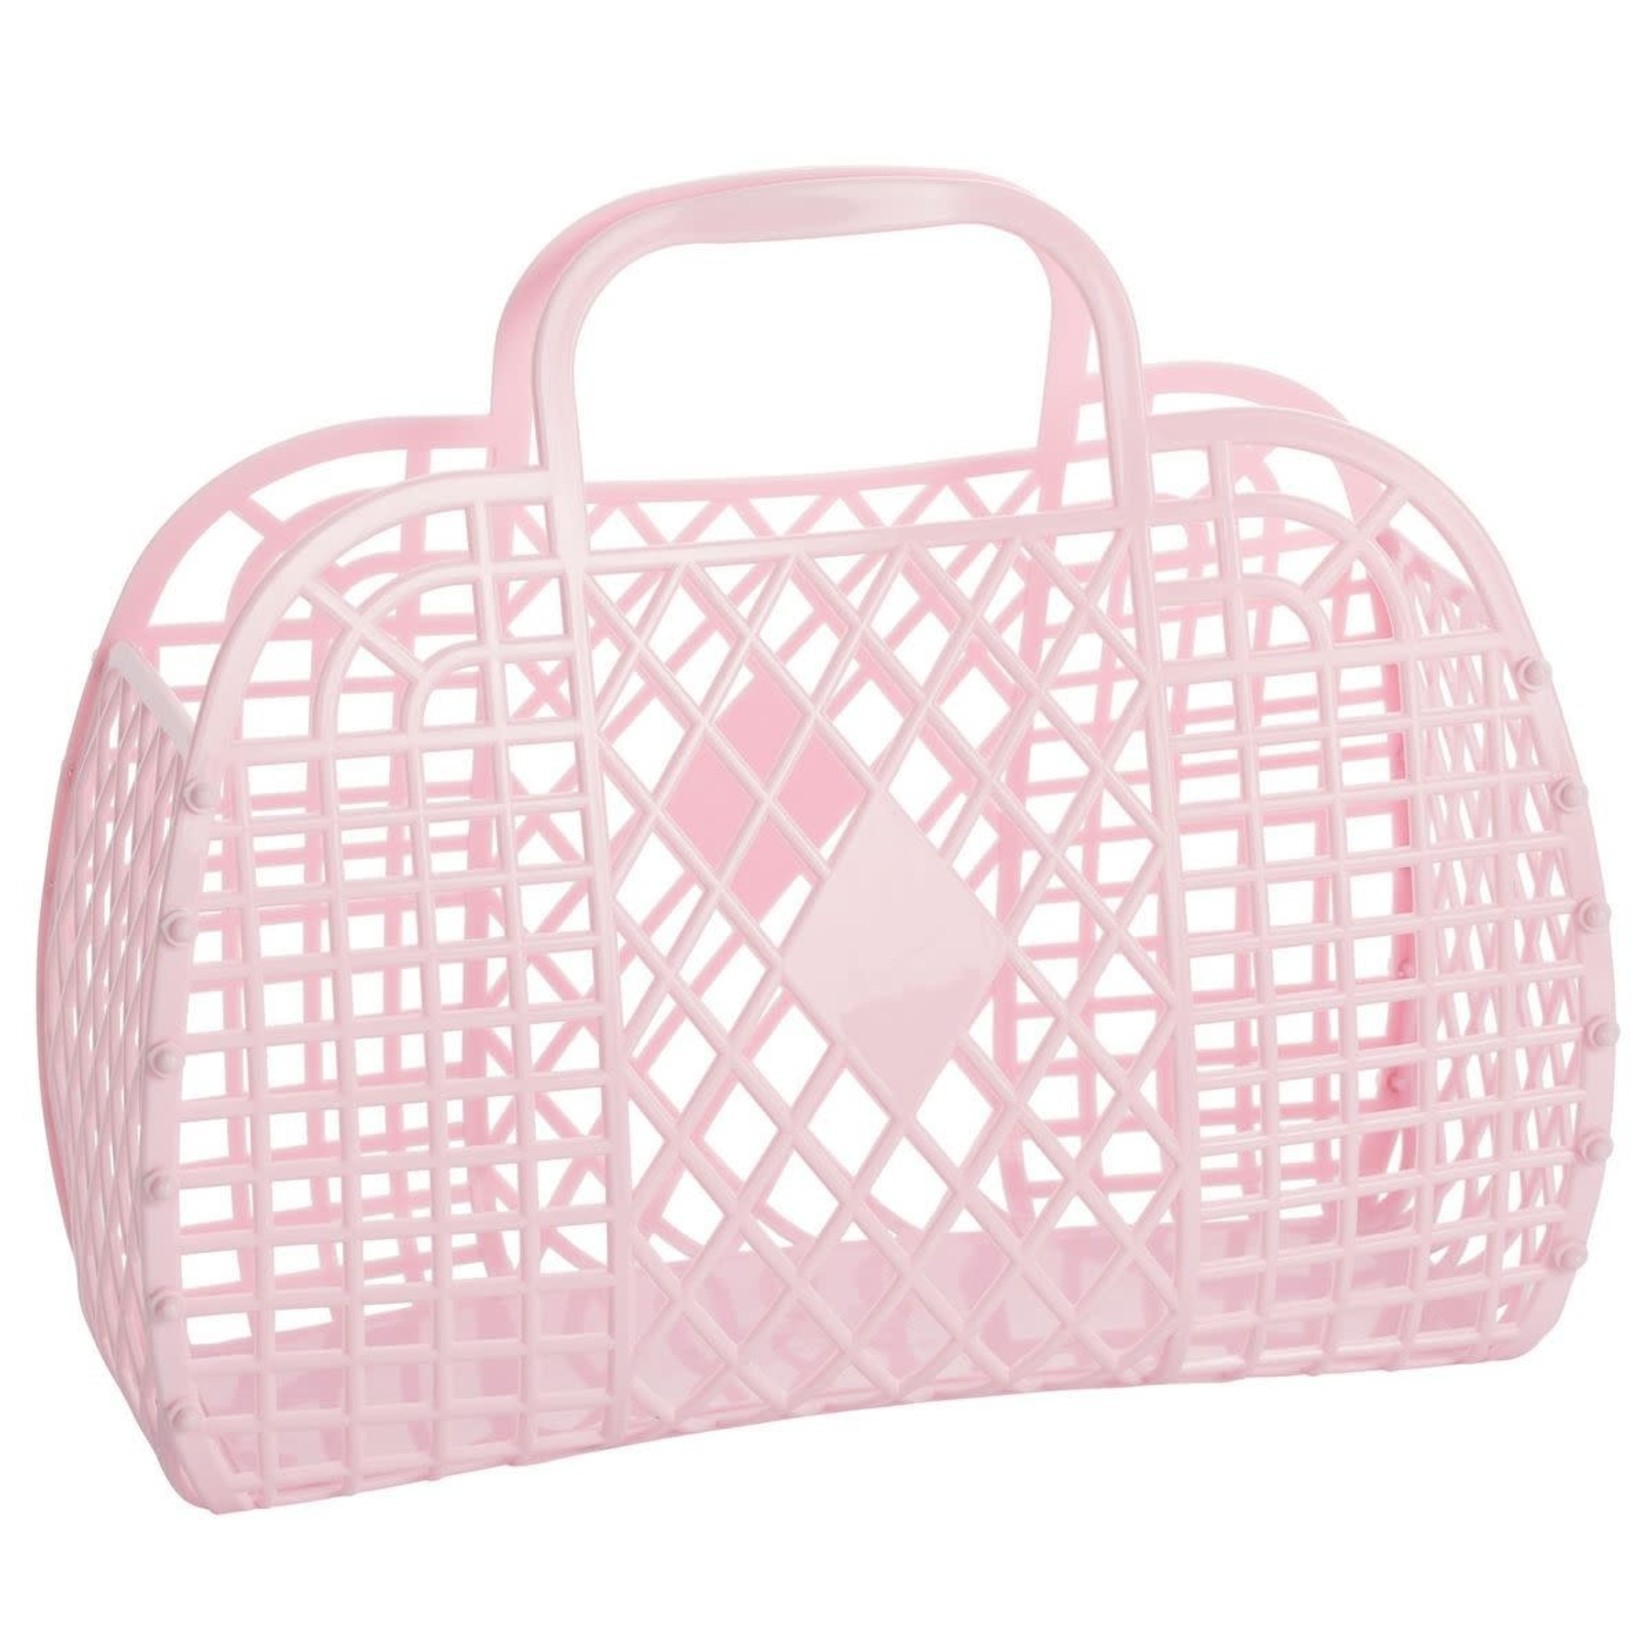 Sun Jellies Retro Basket - Large Pink